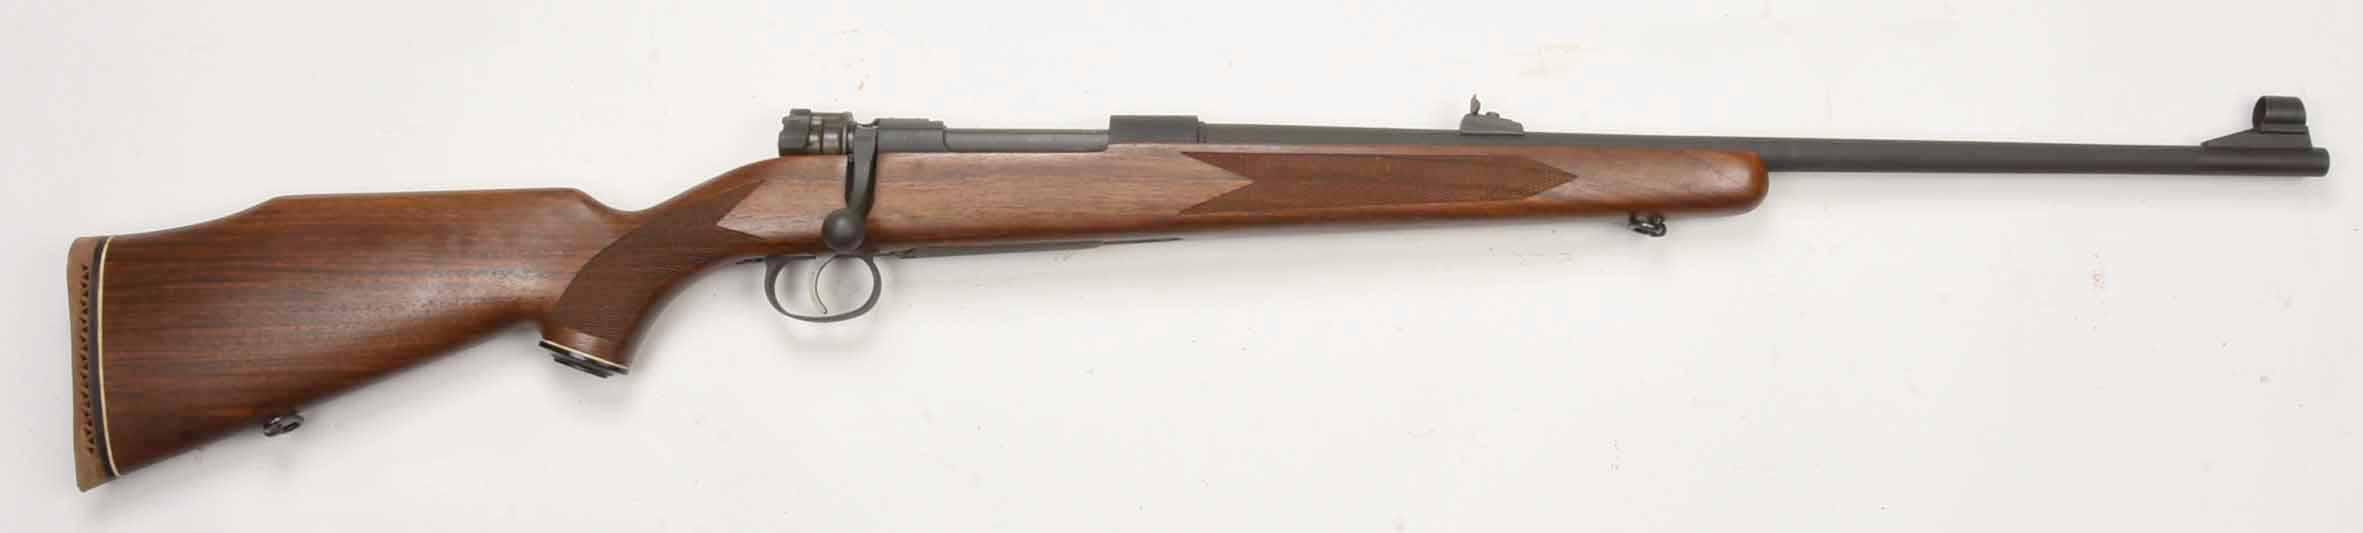 ./guns/rifle/bilder/Rifle-Kongsberg-M83S-5555-1.jpg